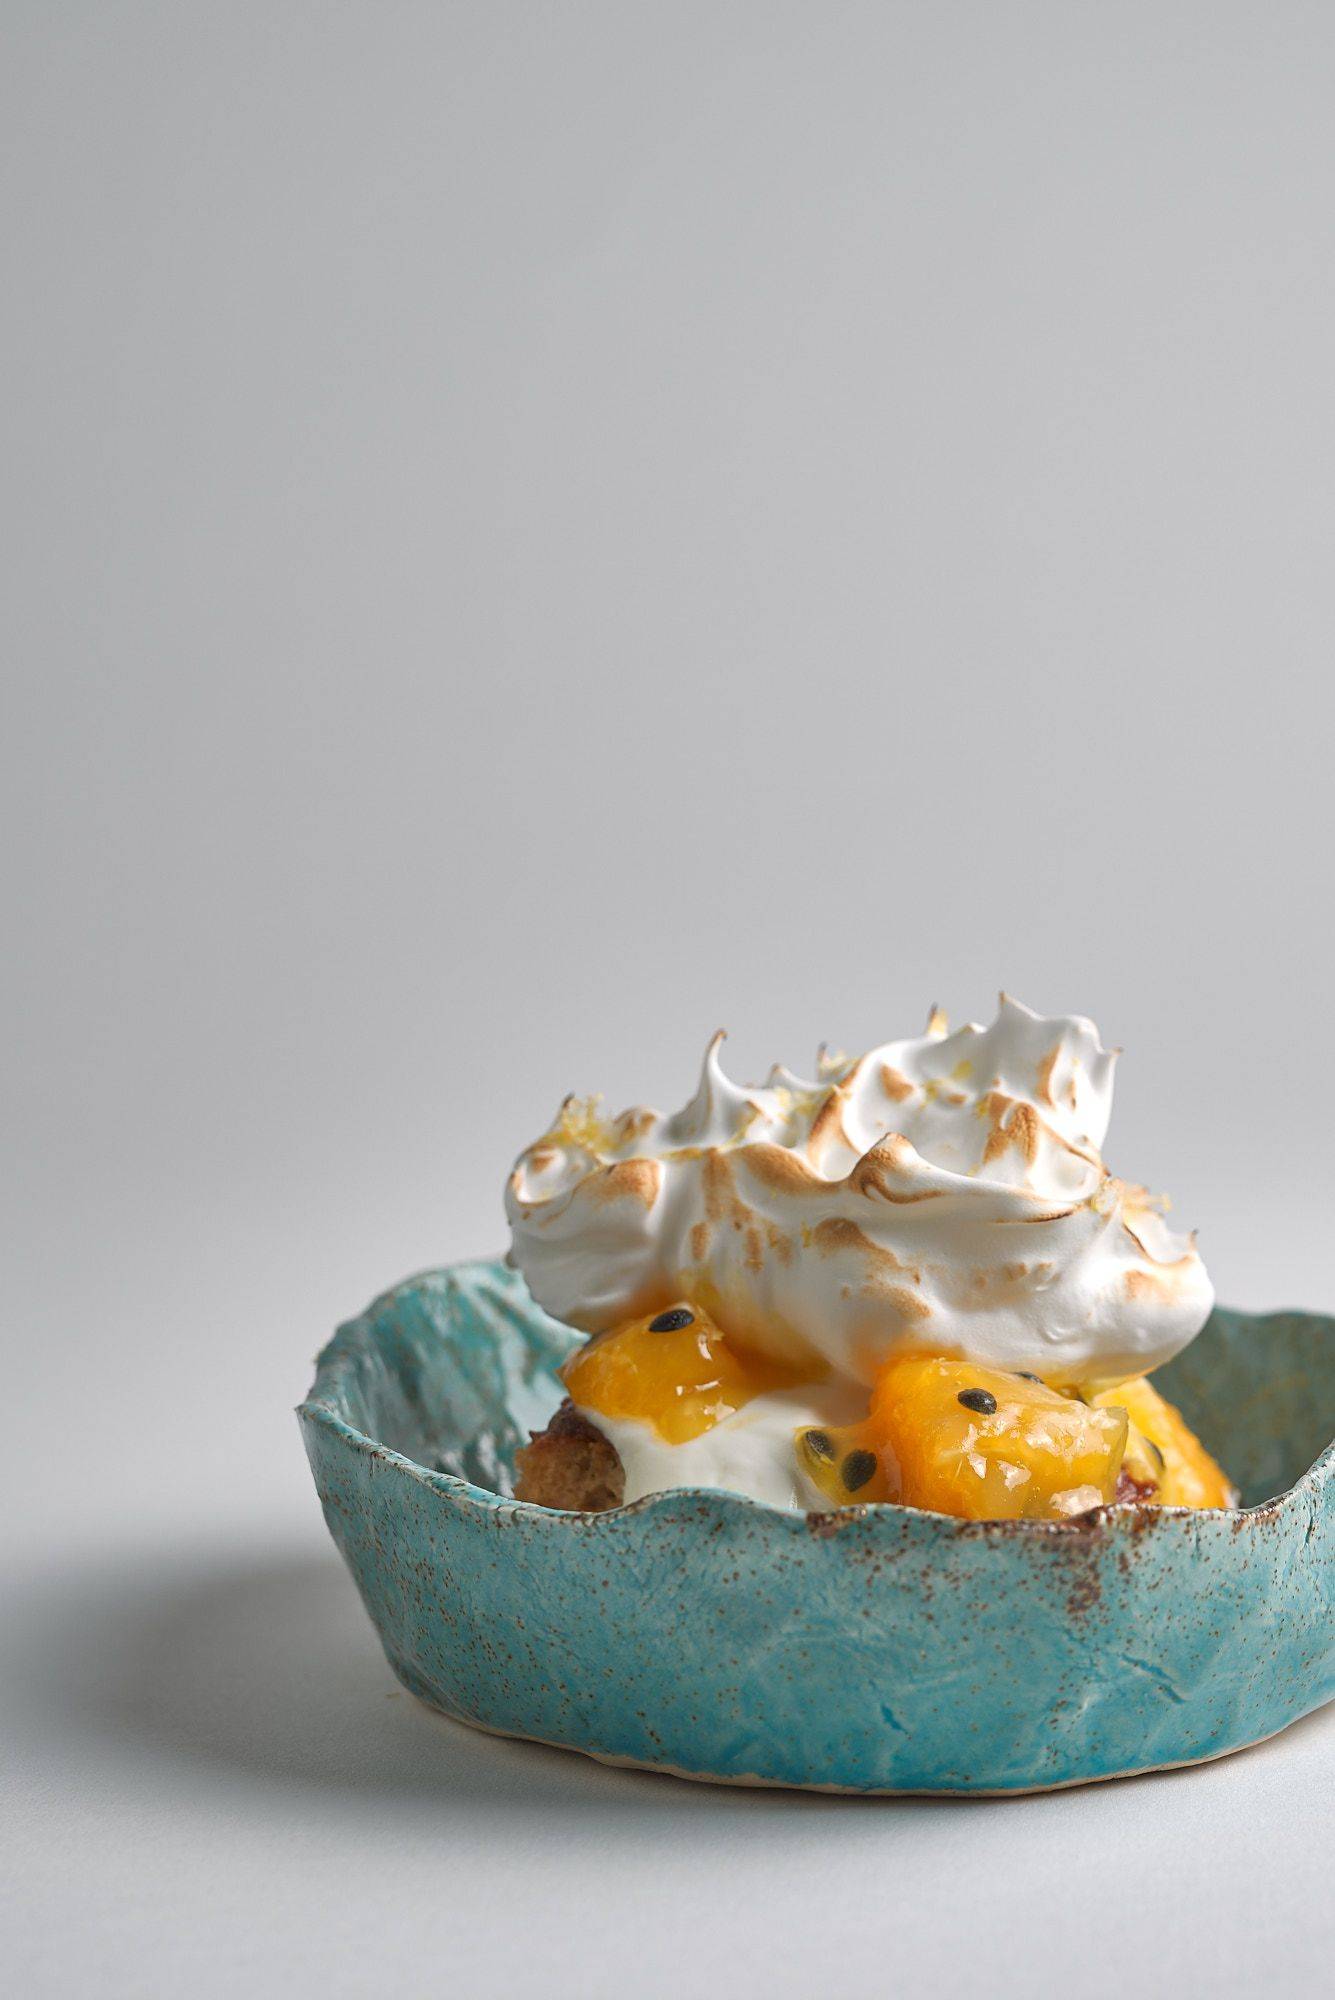 passionfruit meringue dessert in a blue ceramic bowl on white background